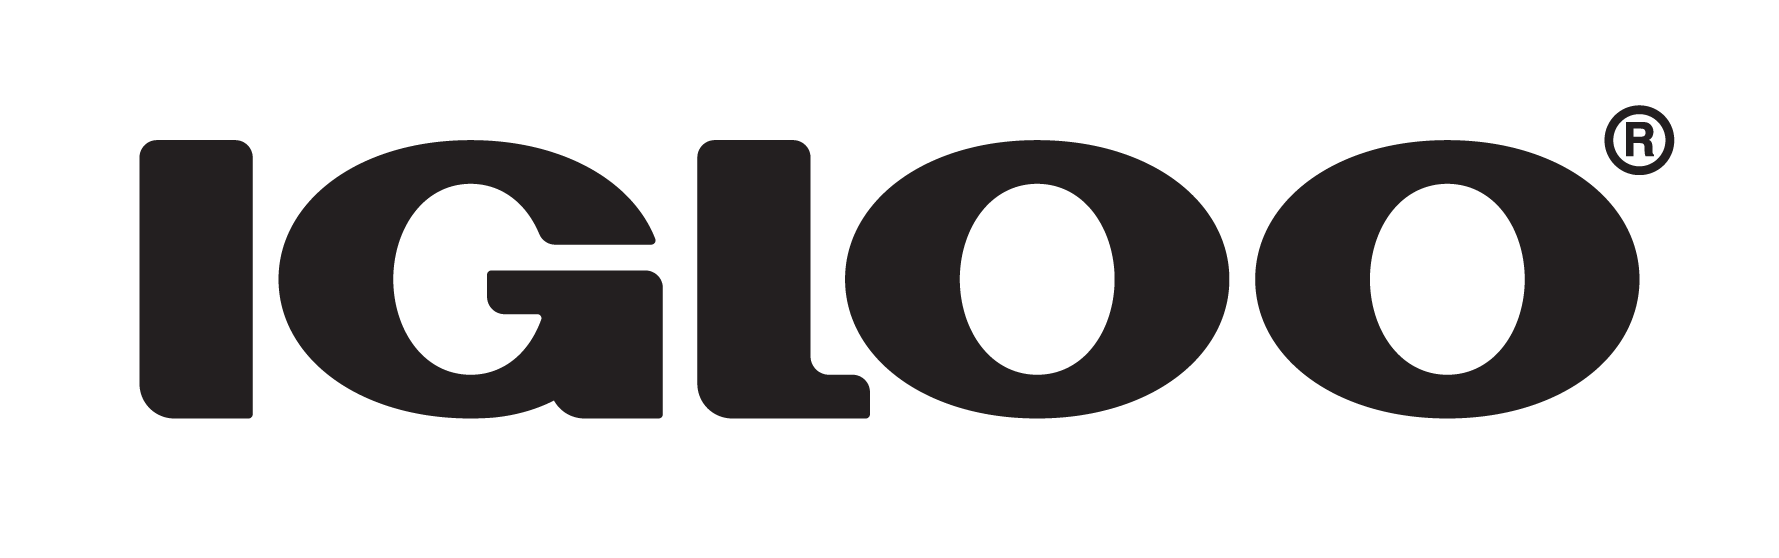 https://www.gemline.com/resource/1703610954000/BrandLogos/brand-logos/logo_igloo.png